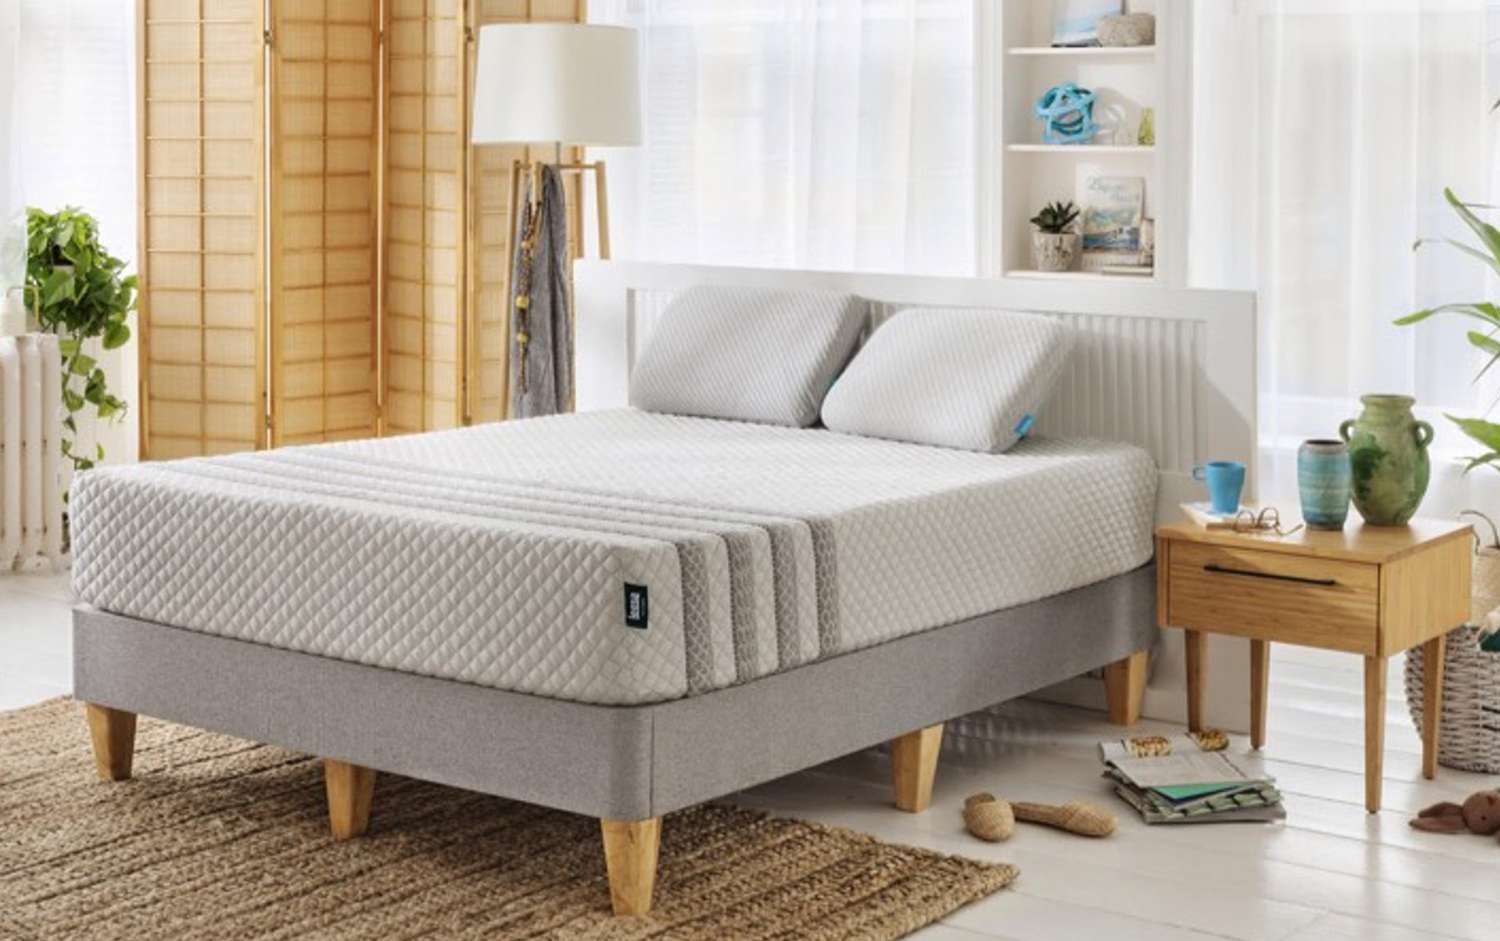 neeva hybrid mattress review